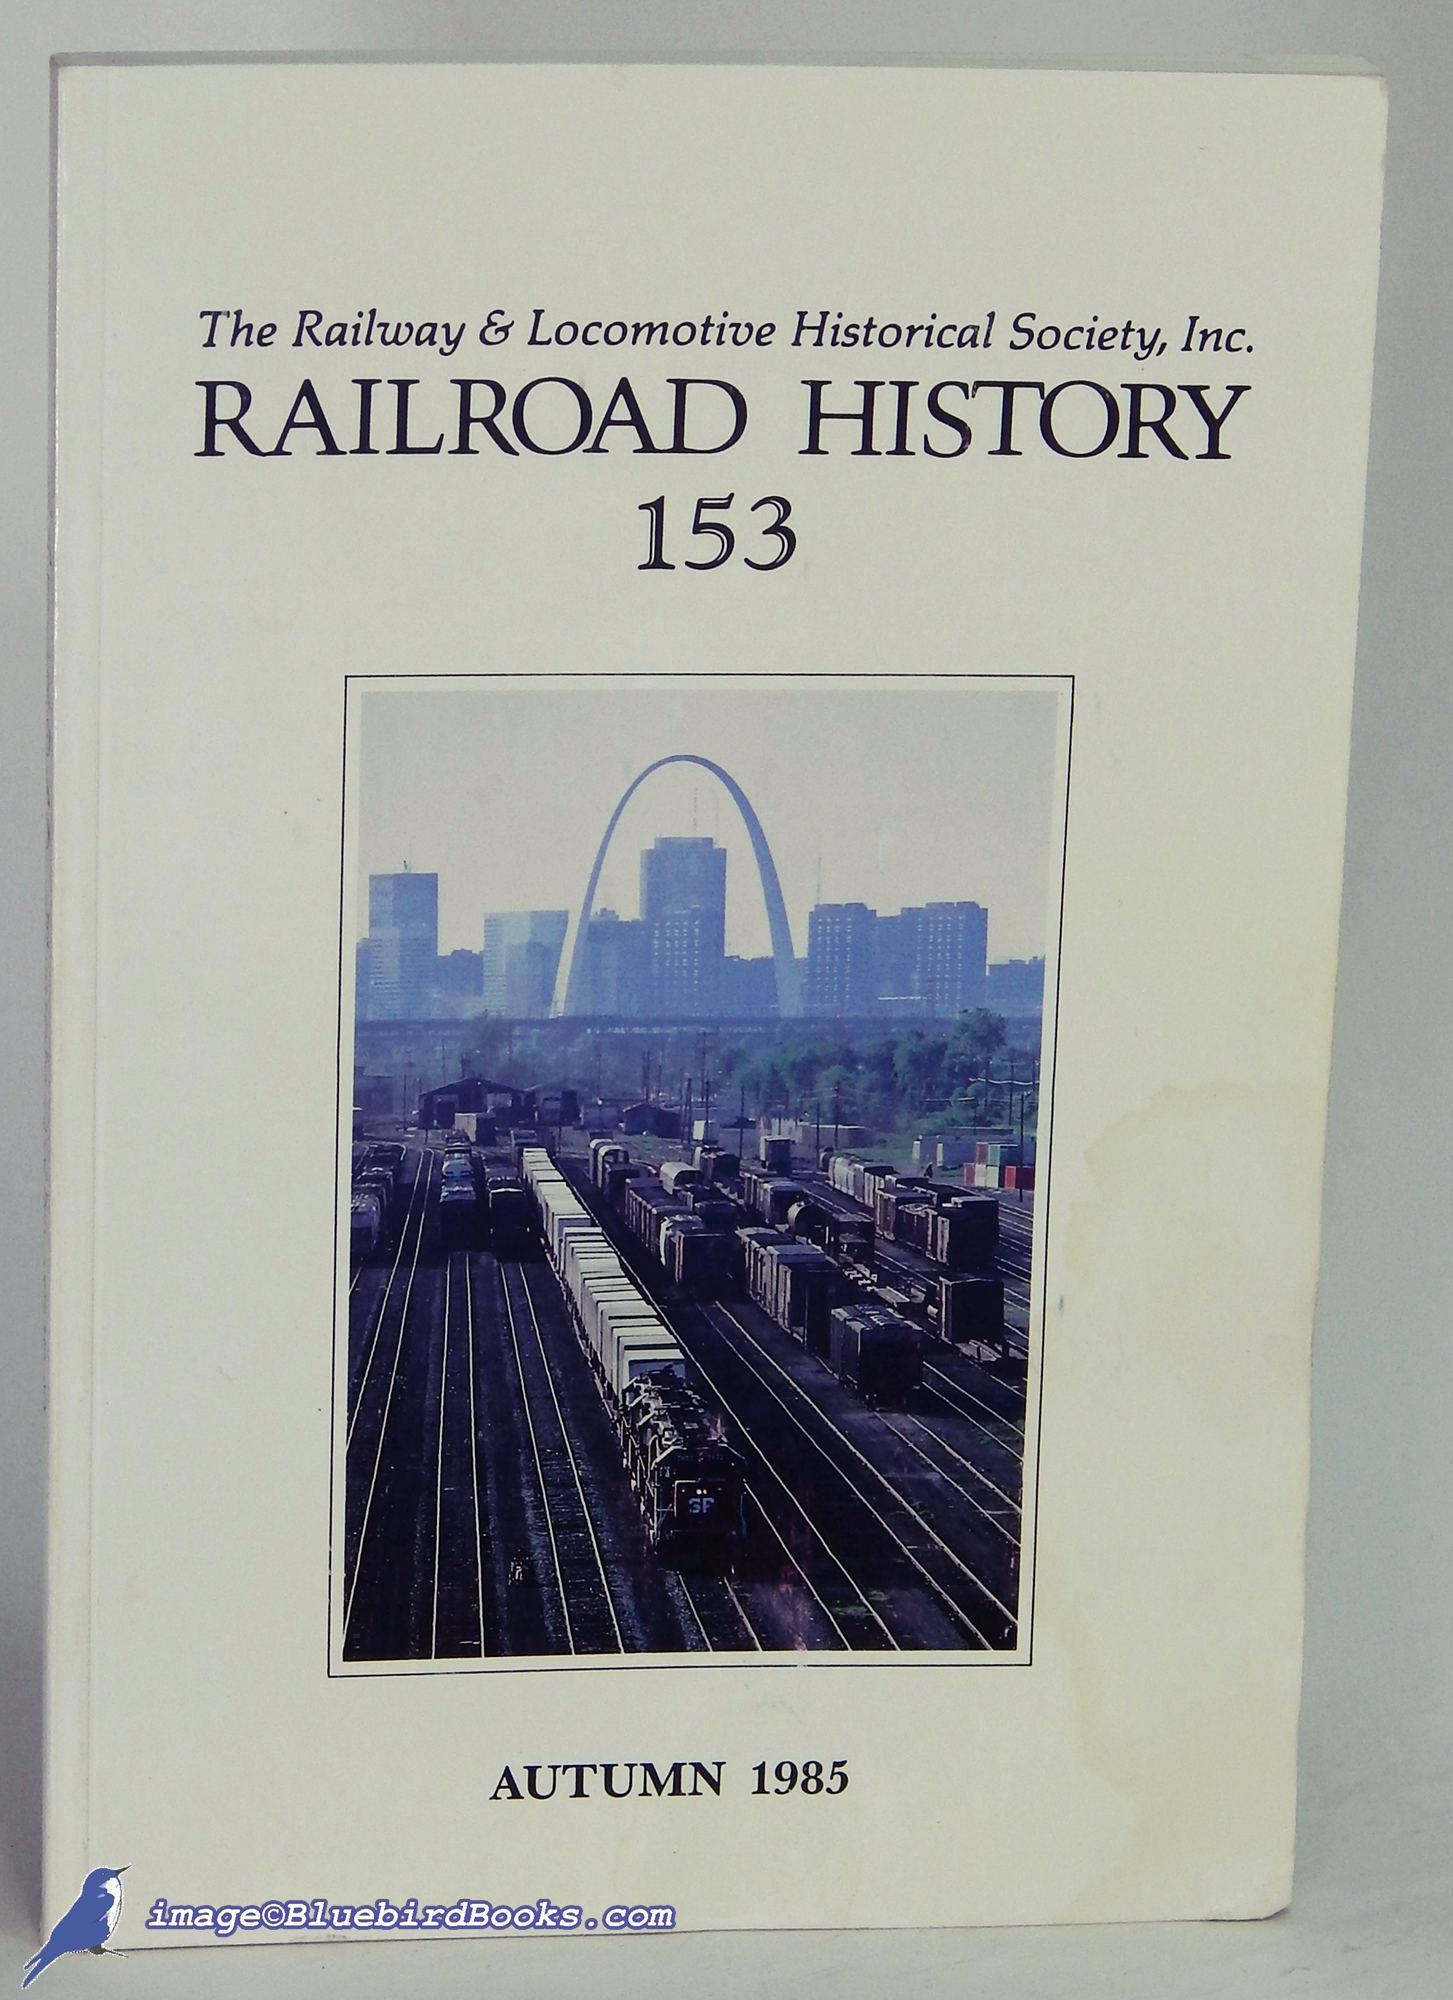 POST, ROBERT C. (EDITOR) - Railroad History 153: The Railway & Locomotive Historical Society (Autumn, 1985)